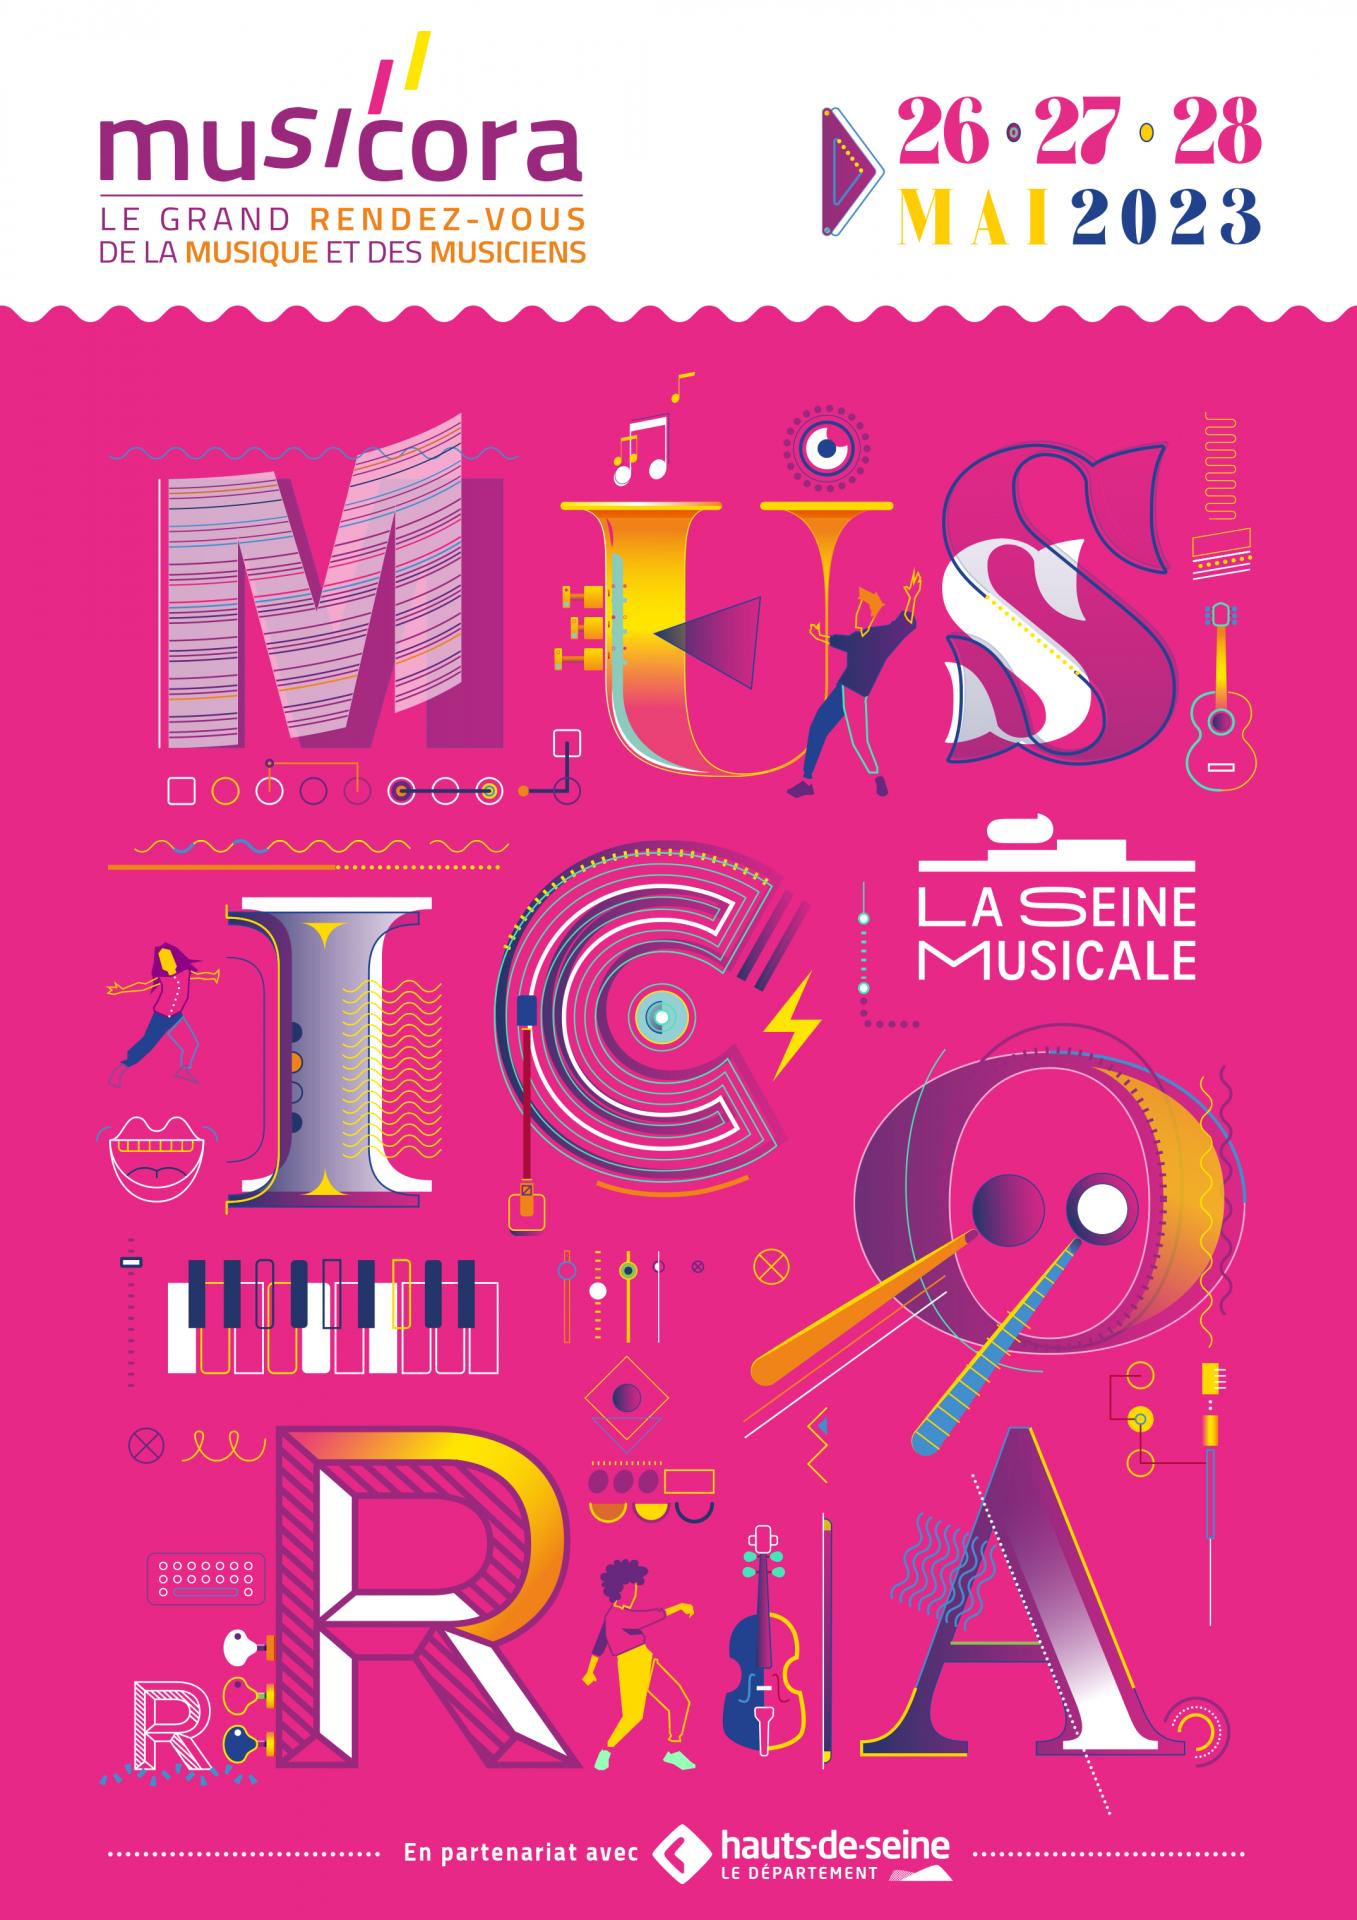 La Seine Musicale accueille Musicora du  26 au 28 mai